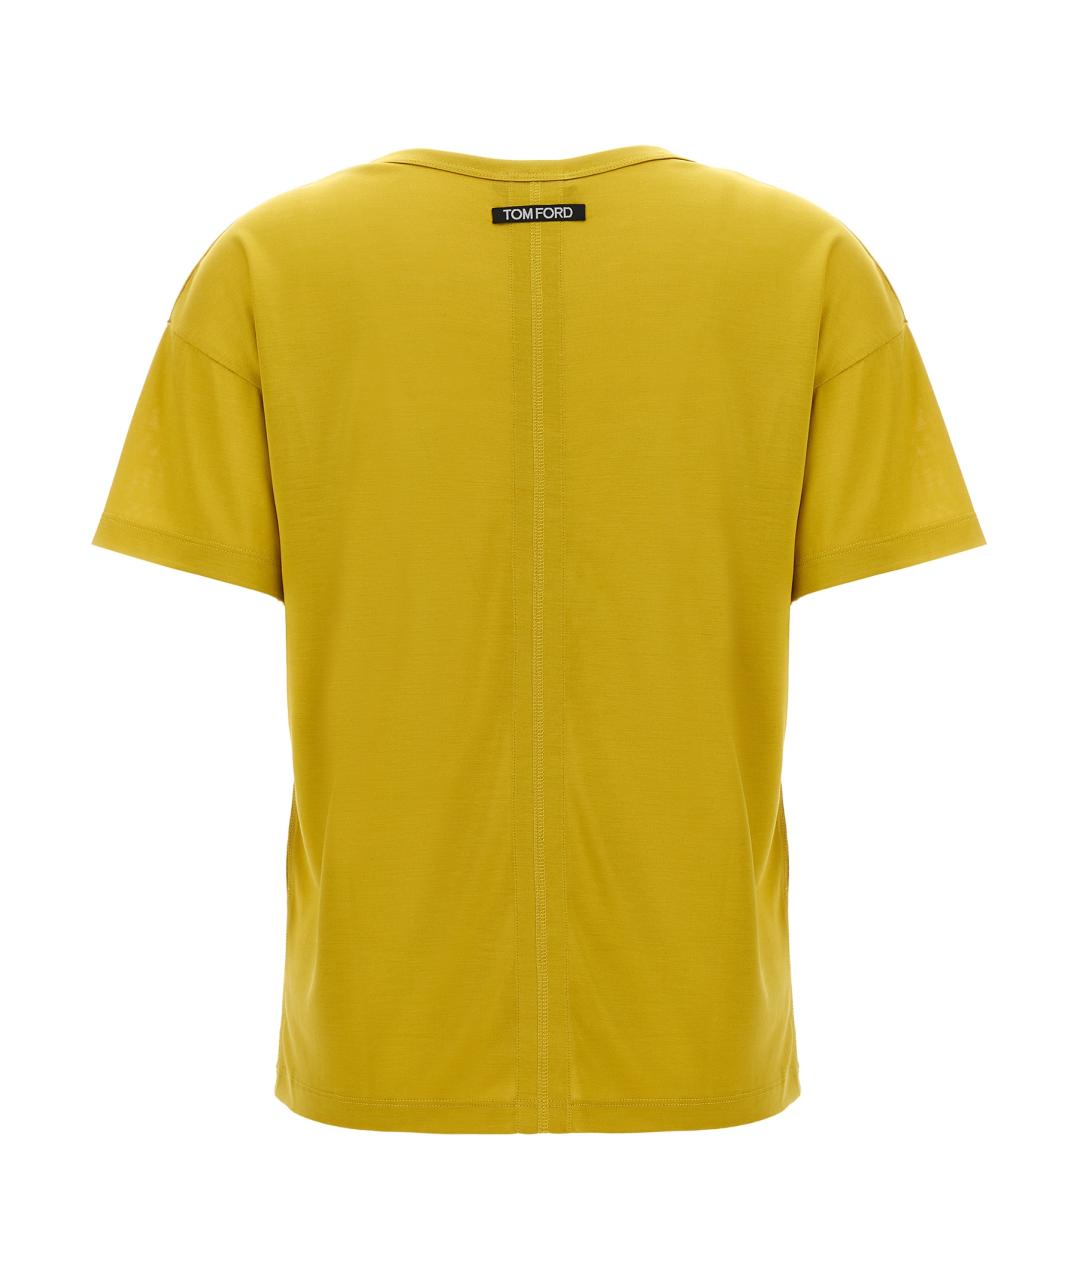 TOM FORD Желтая шелковая футболка, фото 2